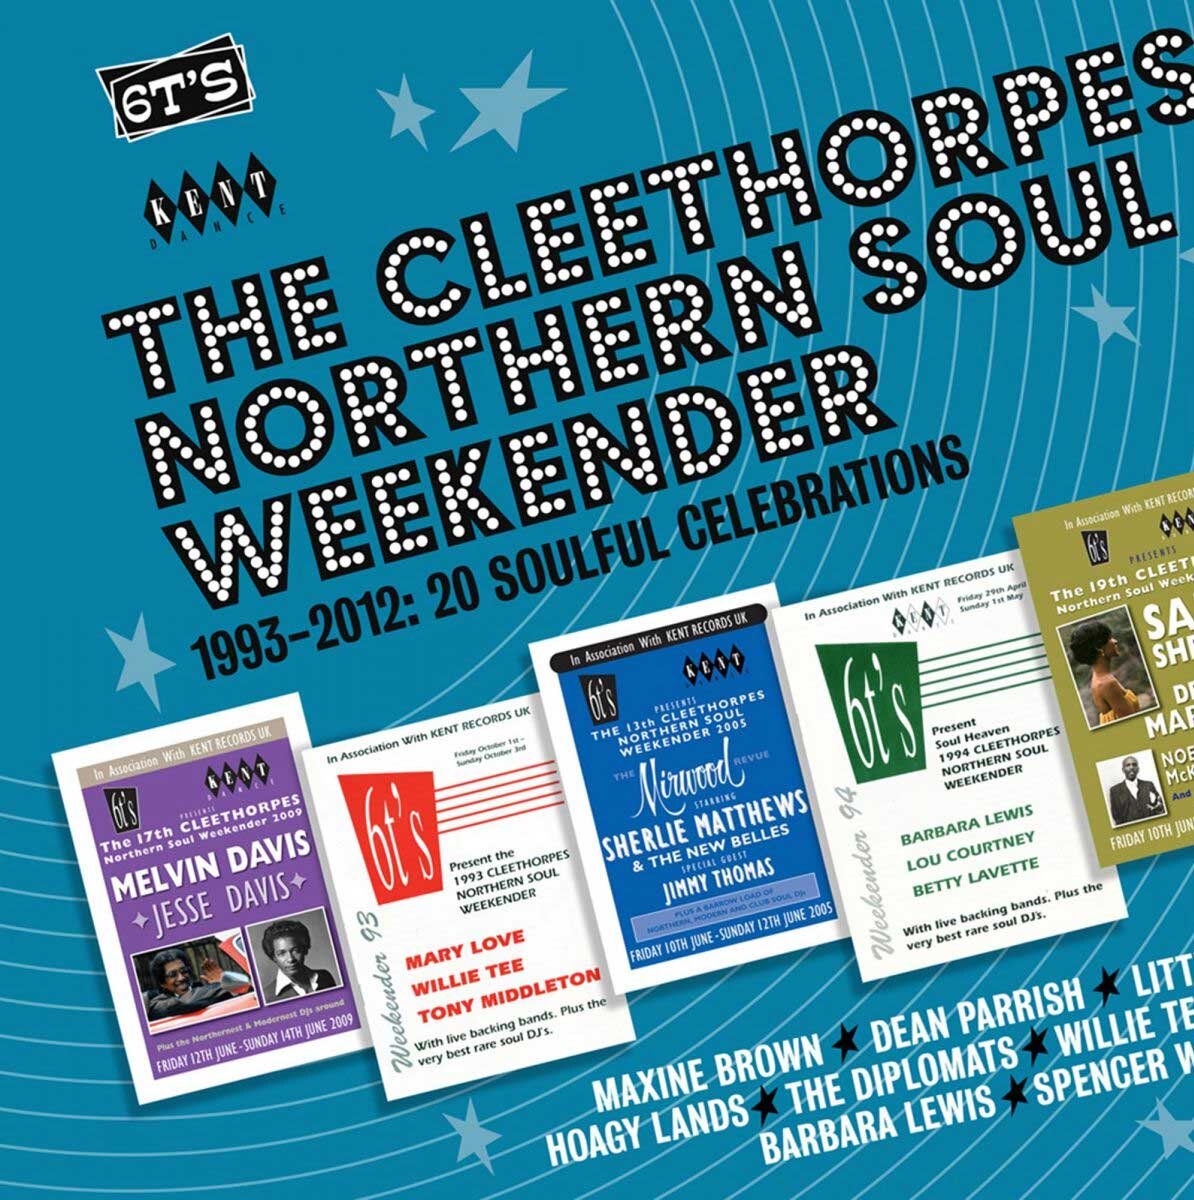 The Cleethorpes Northern Soul Weekender 1993-2012 - VA - Kent Records CD